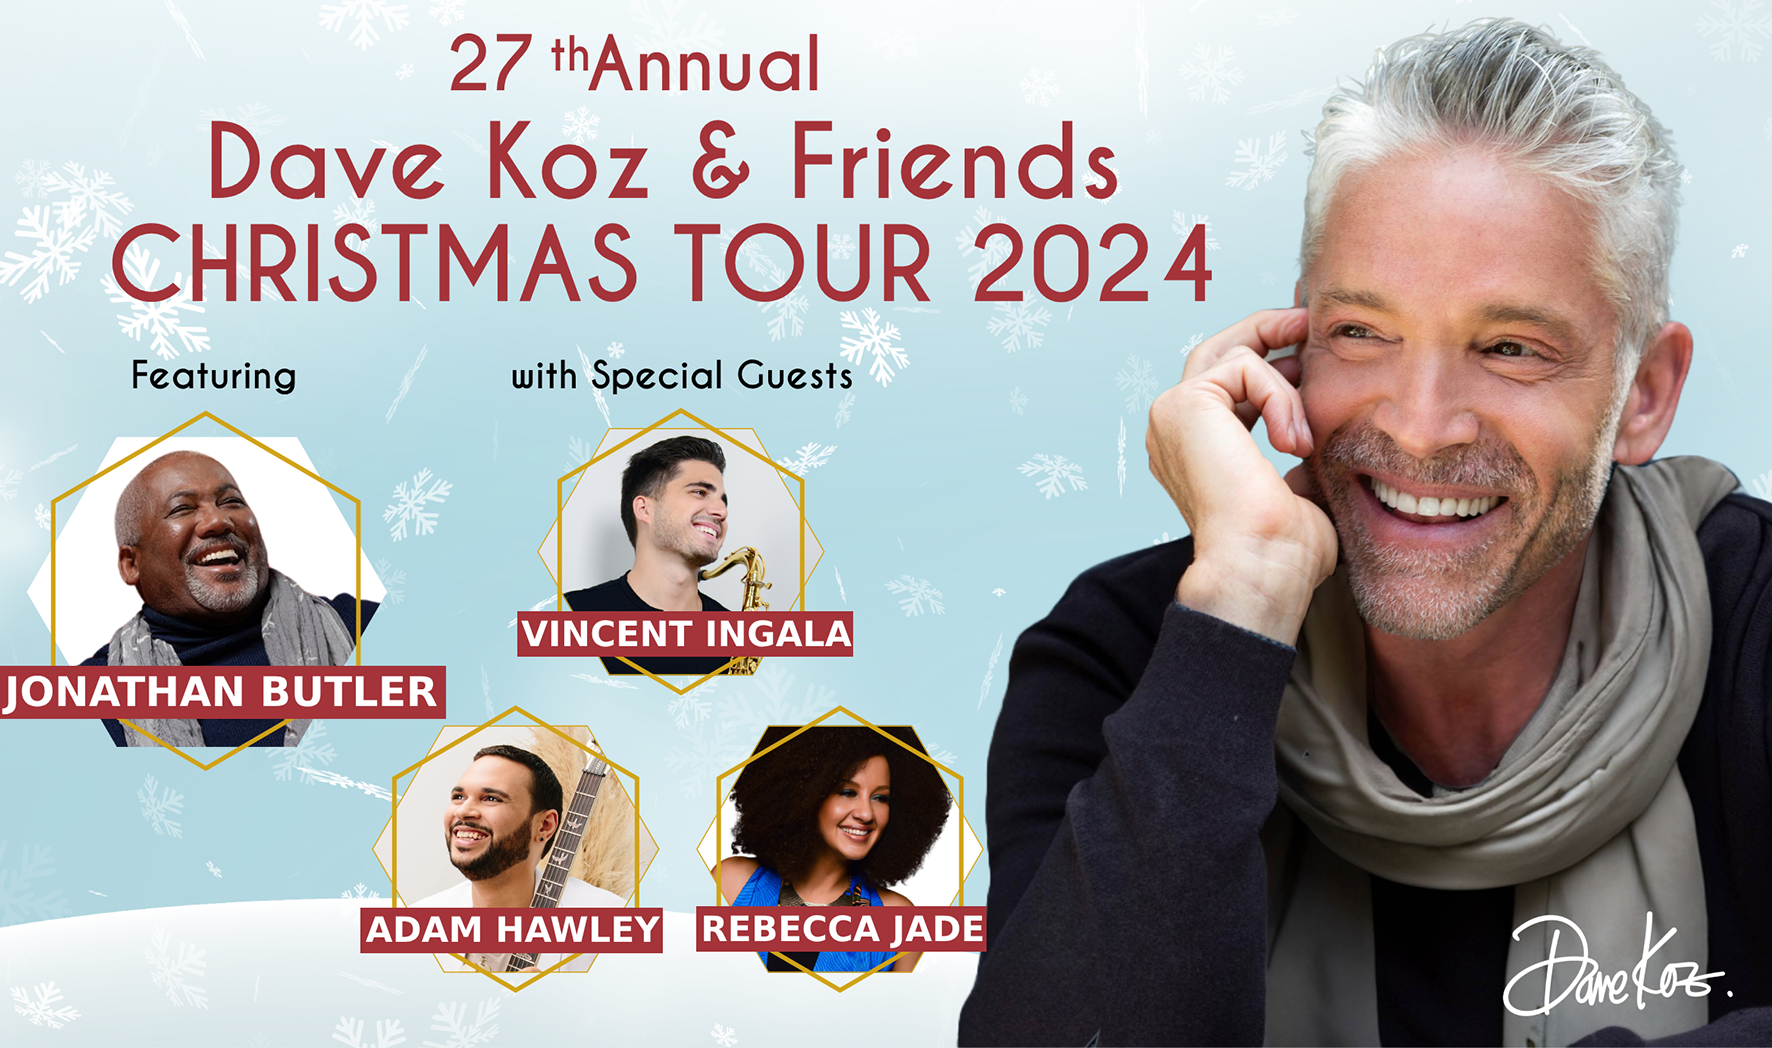 Dave Koz and Friends Christmas Tour 2024